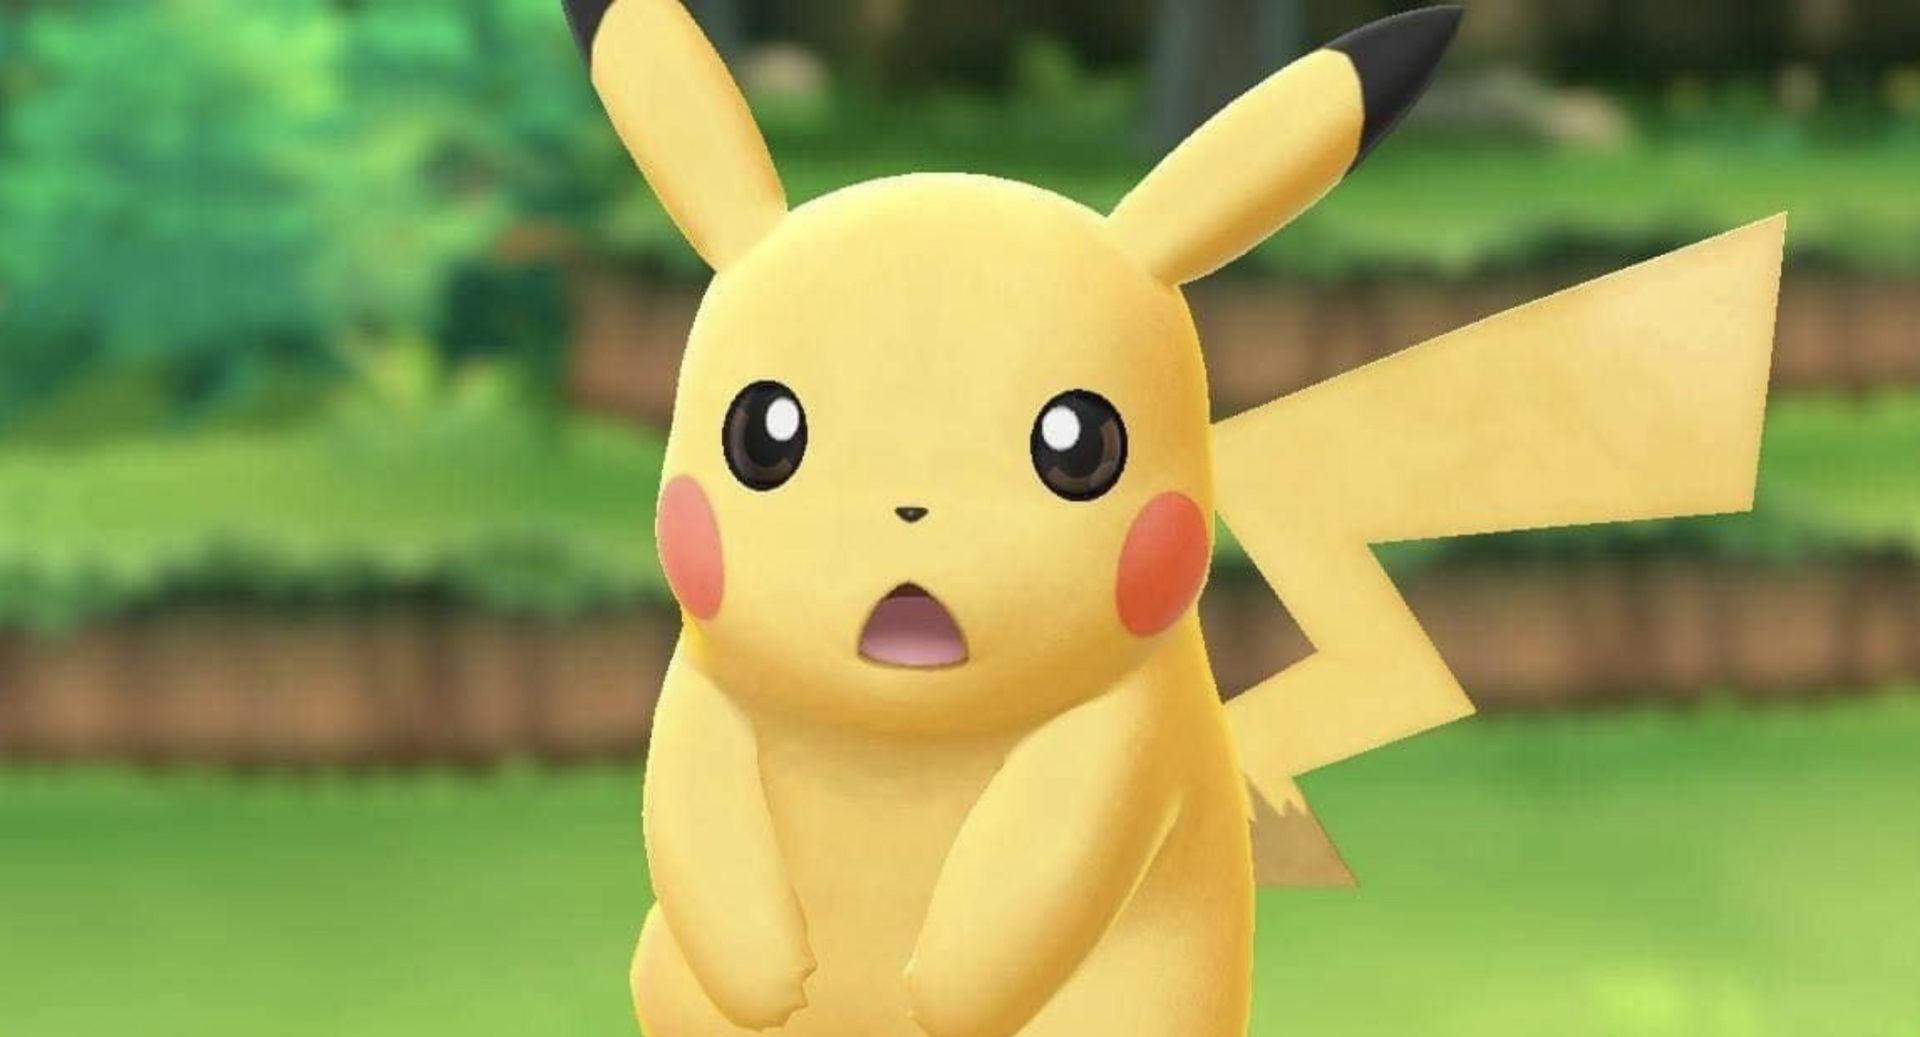 Screenshot of shocked Pikachu from Pokemon Lets Go Eevee & Pikachu.